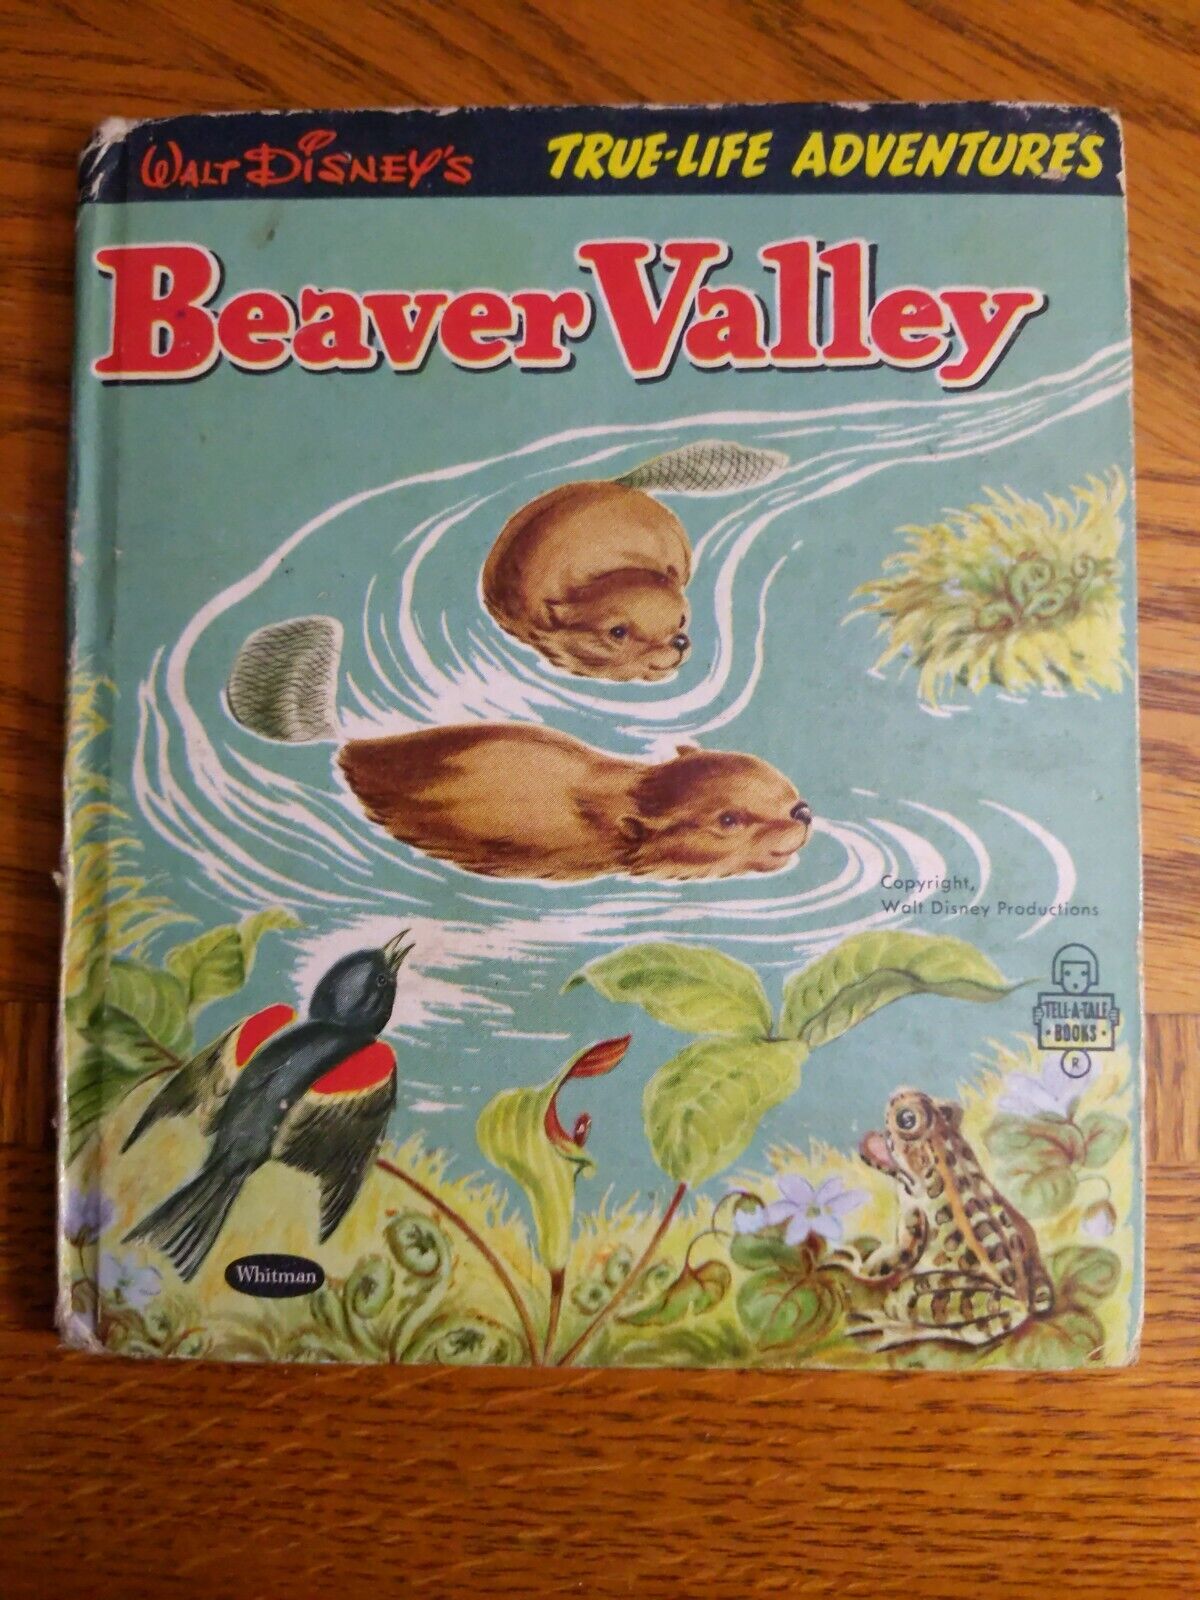 1954 Vintage Whitman Tell-a-tale Walt Disney True-life Adventures Beaver Valley